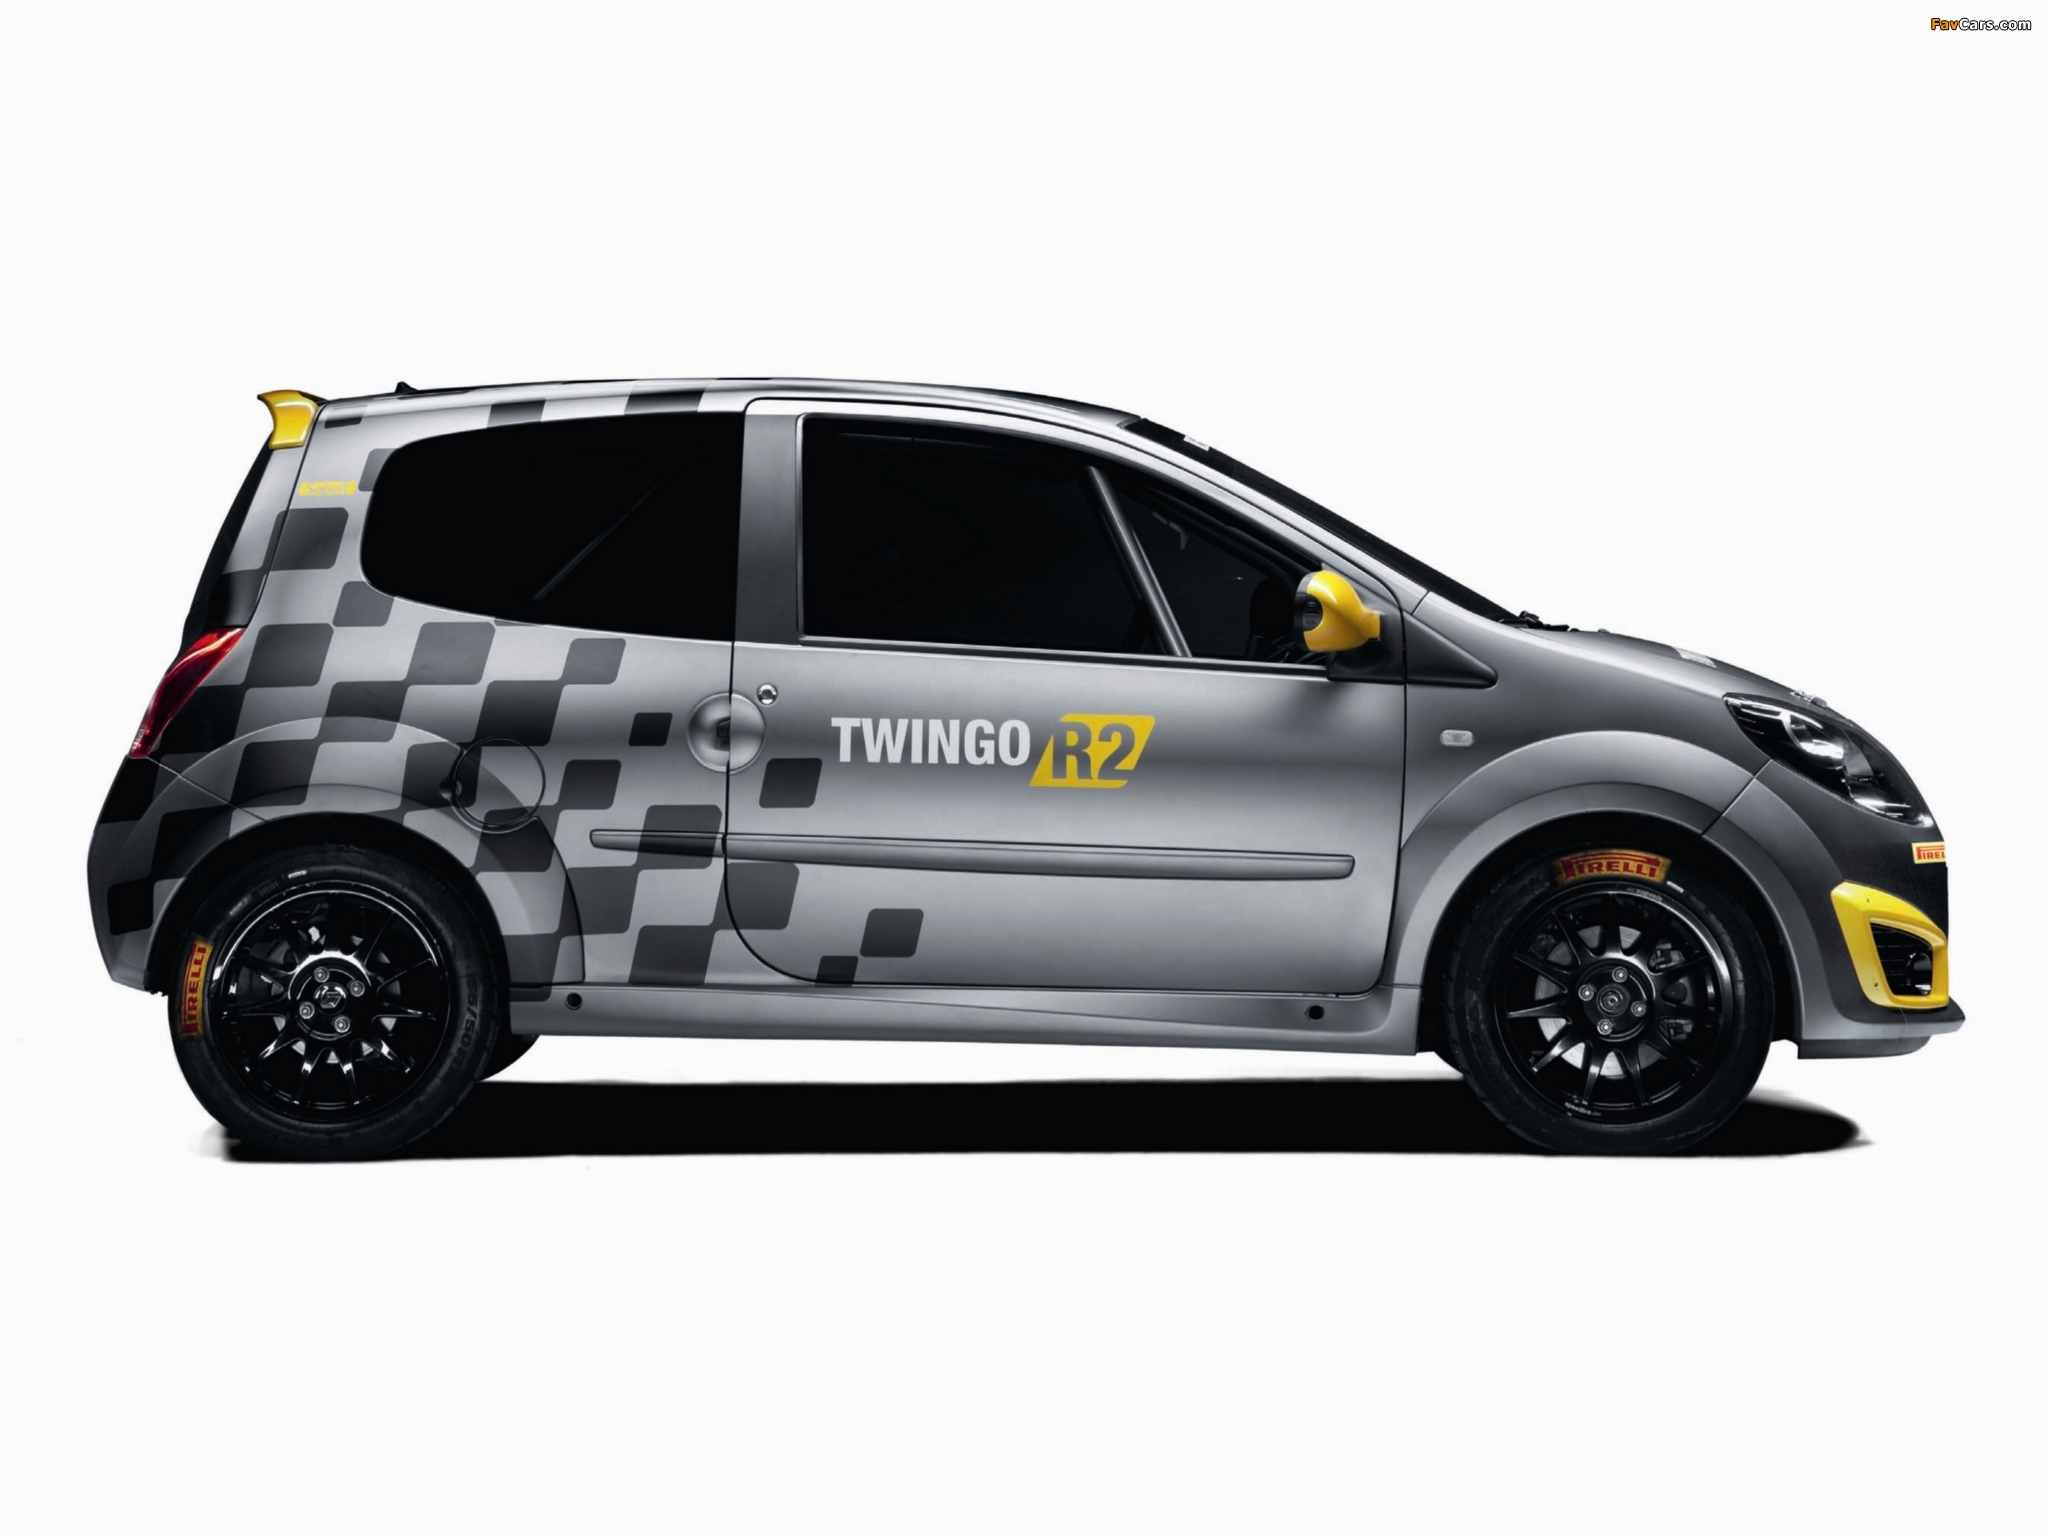 Renault Twingo R2 2011 photos (2048 x 1536)